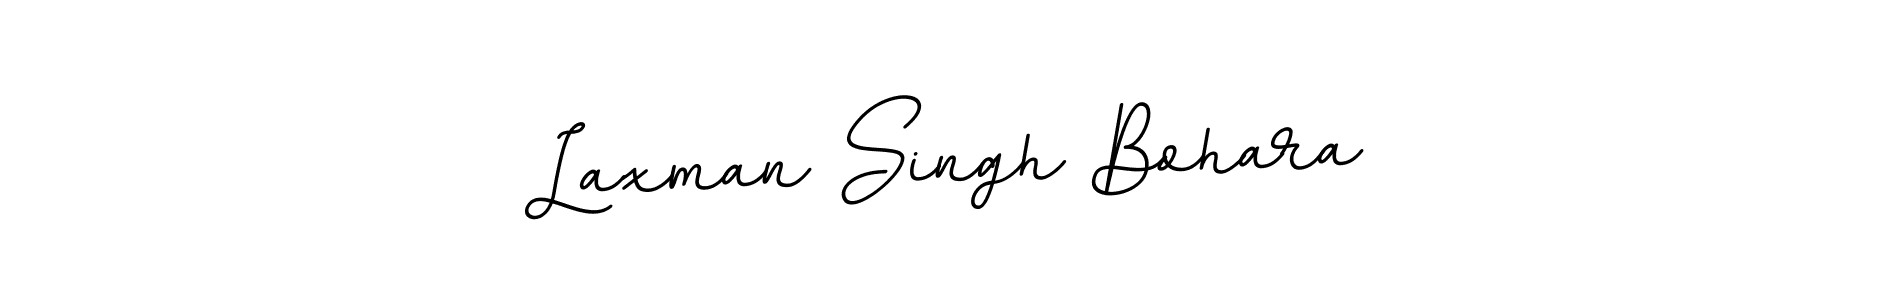 How to Draw Laxman Singh Bohara signature style? BallpointsItalic-DORy9 is a latest design signature styles for name Laxman Singh Bohara. Laxman Singh Bohara signature style 11 images and pictures png